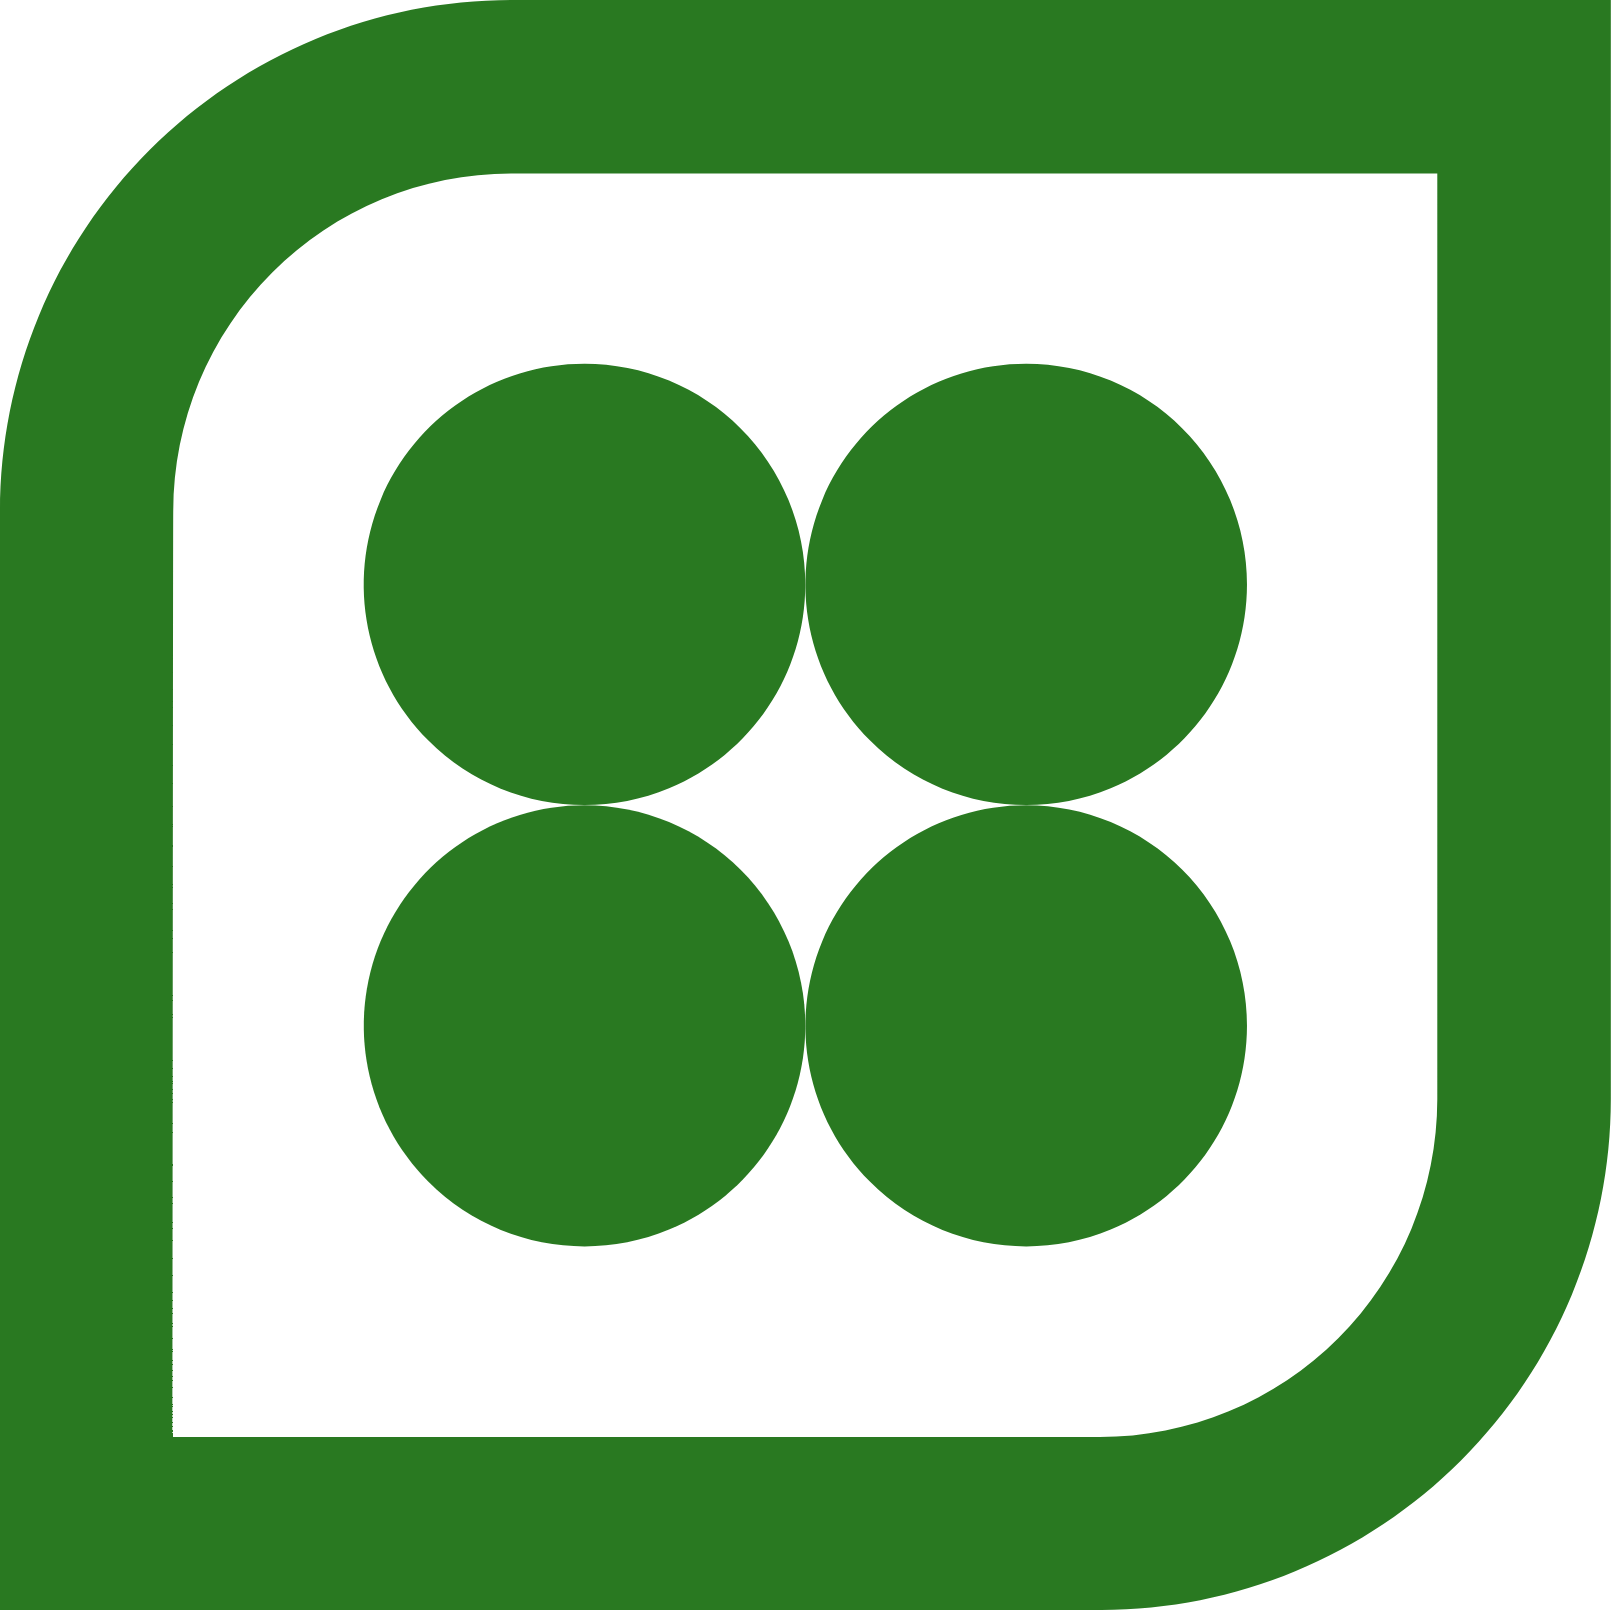 Capstone Green Energy logo (transparent PNG)